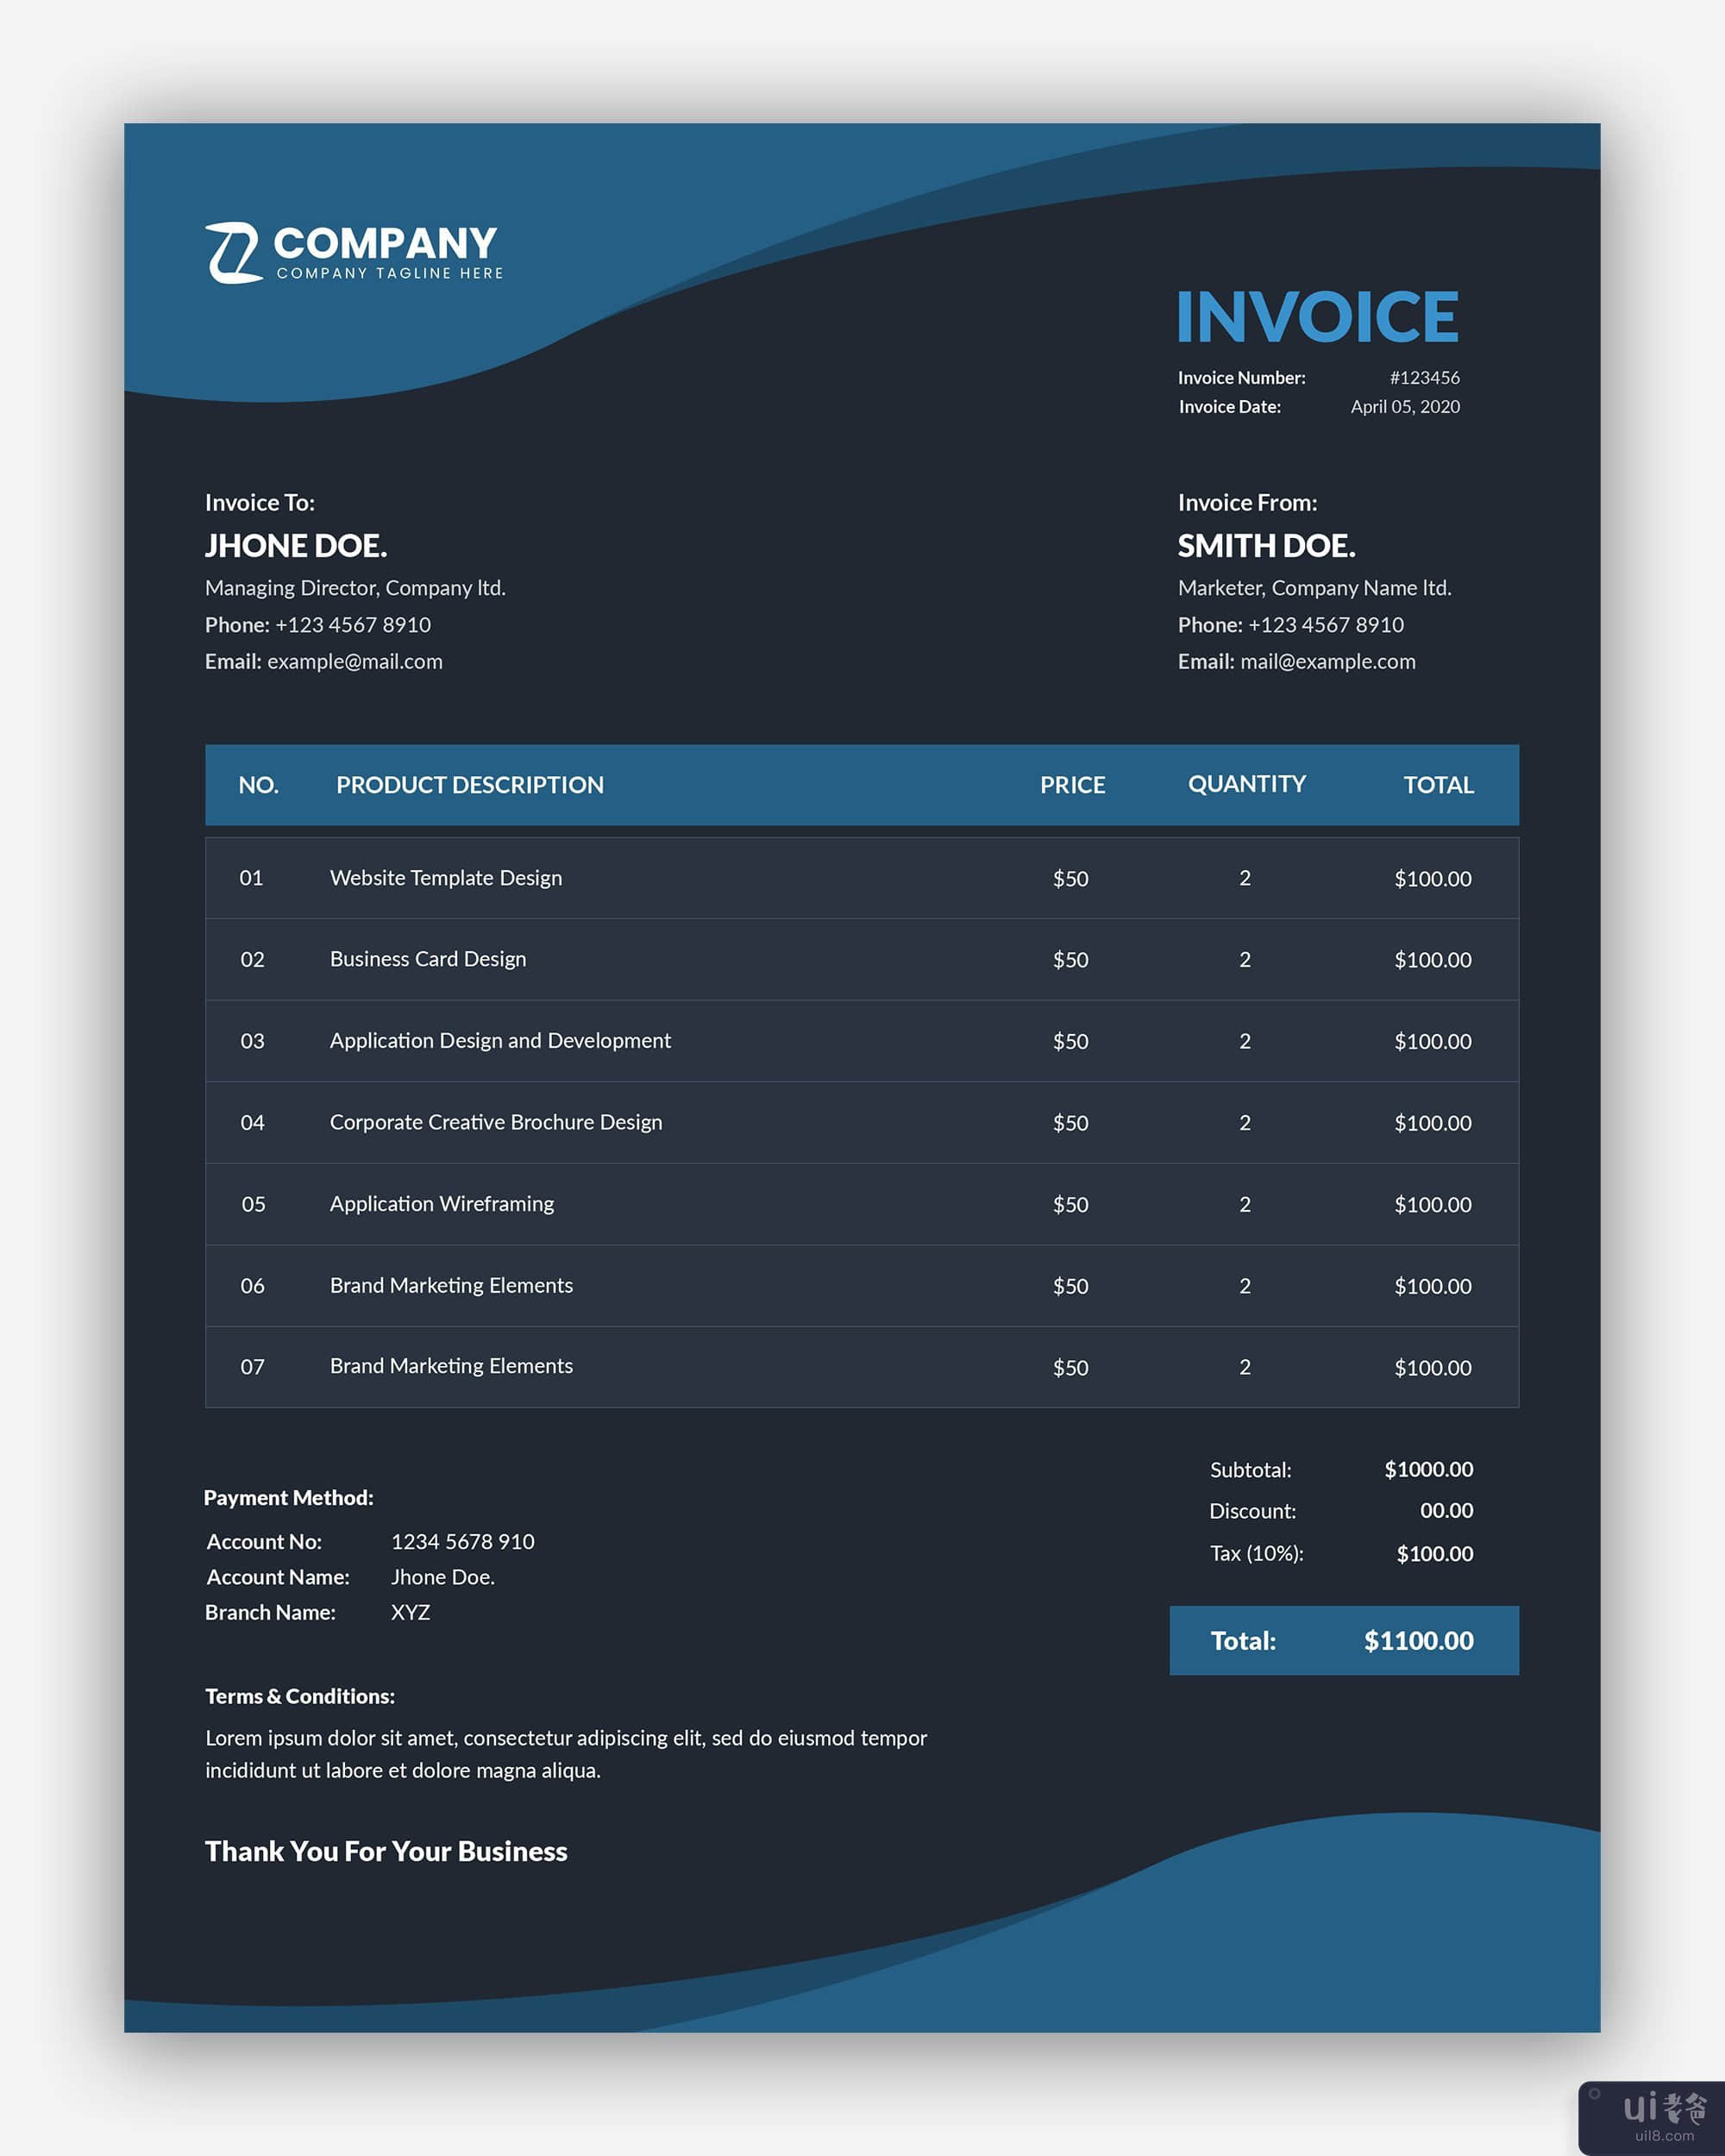 抽象的深蓝色商业发票模板(Abstract dark blue business invoice template)插图